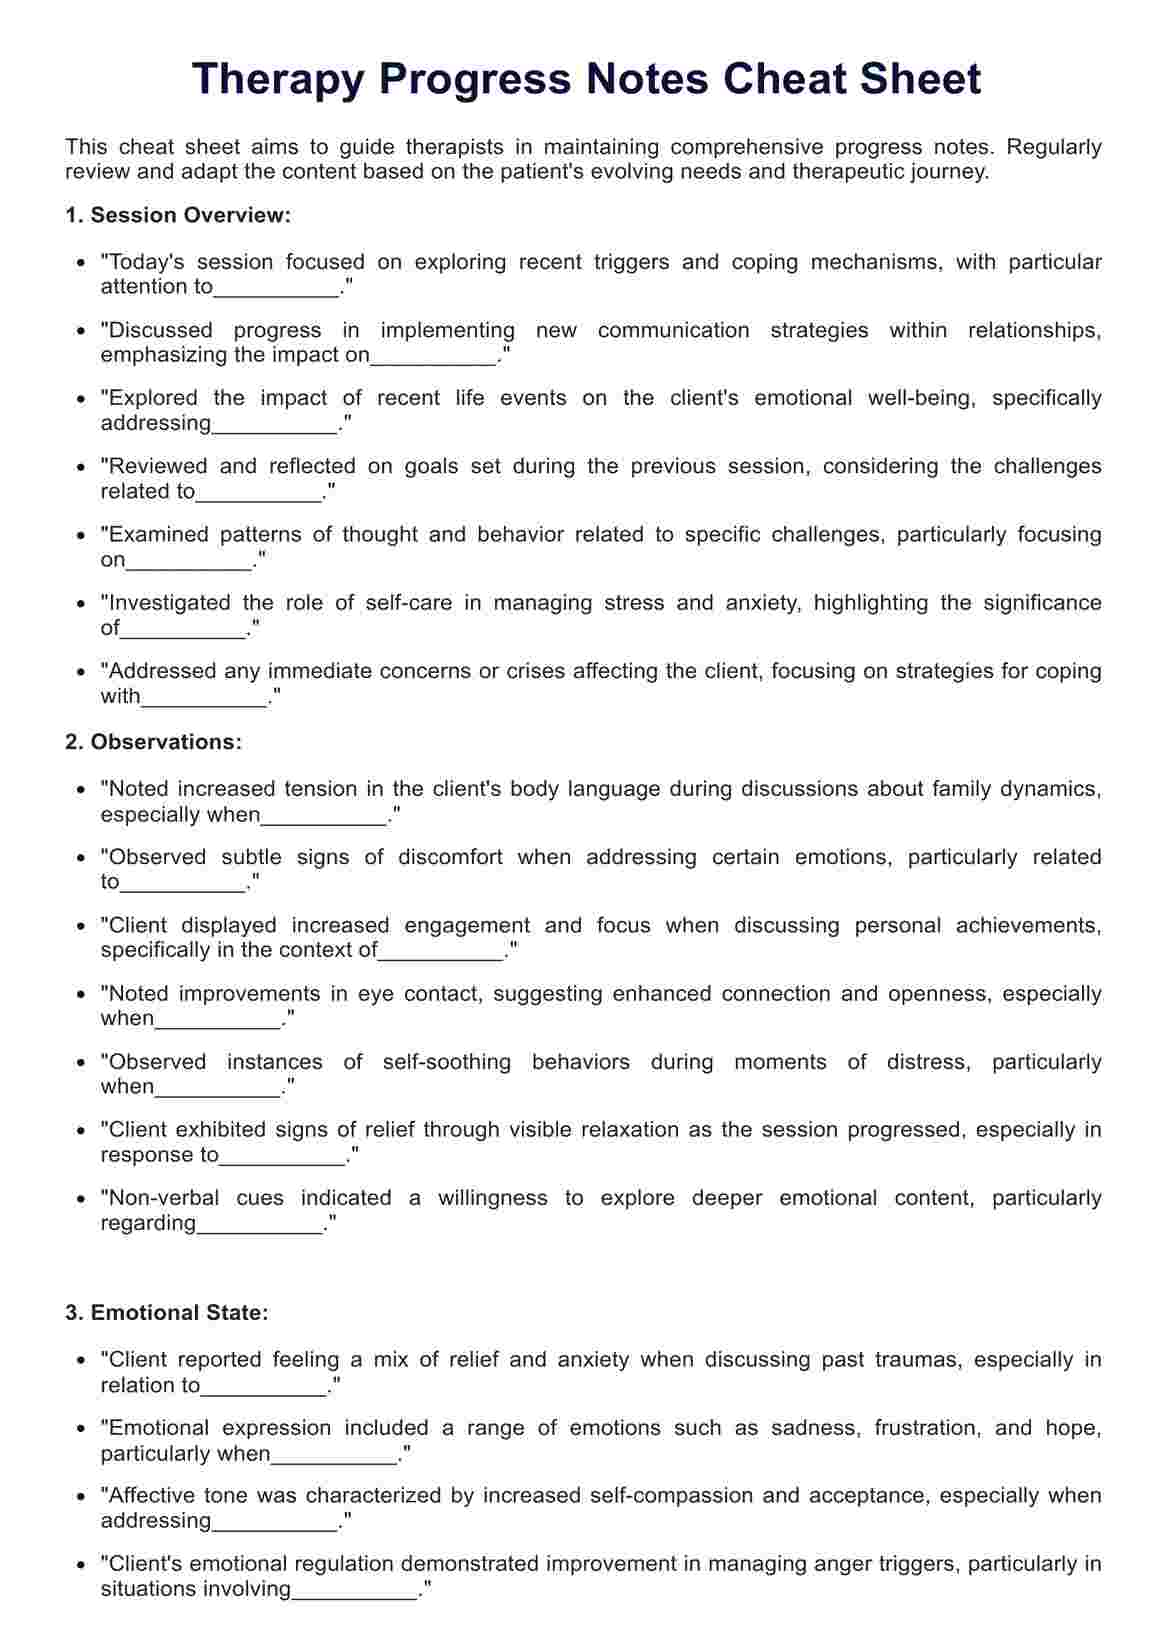 Therapy Progress Notes Cheat Sheet PDF Example